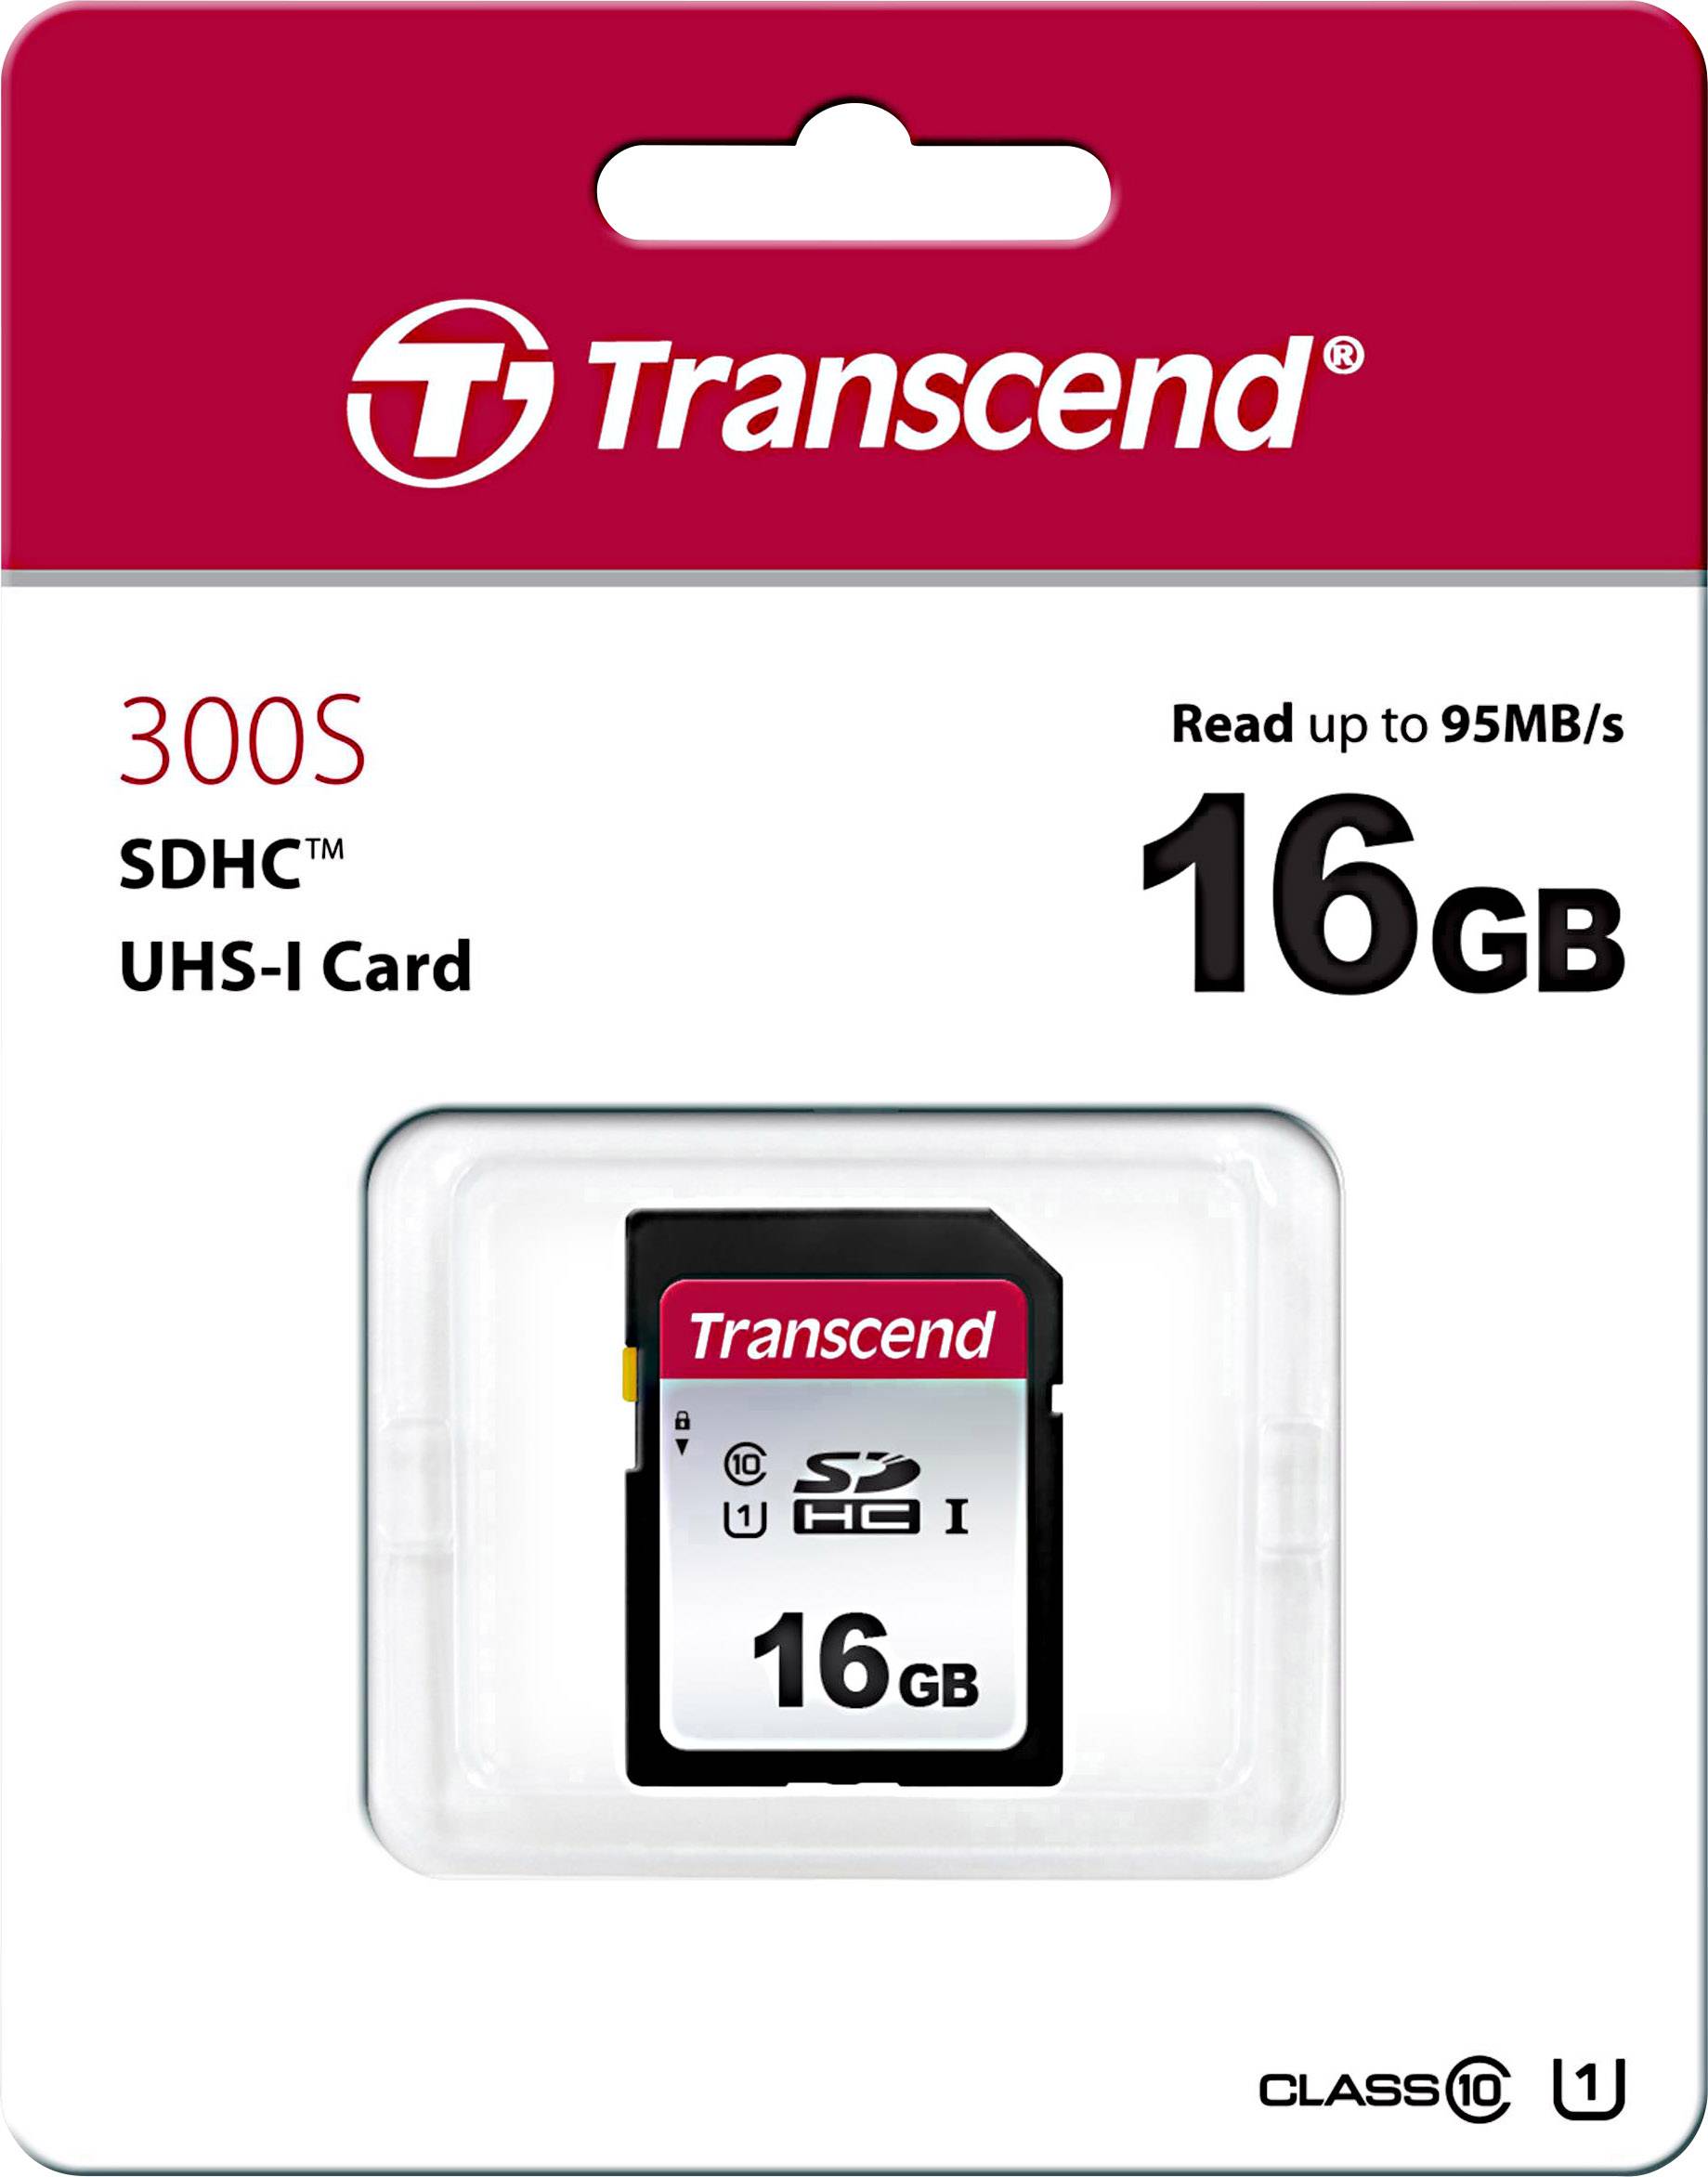 16GB SD Card Transcend Class 10